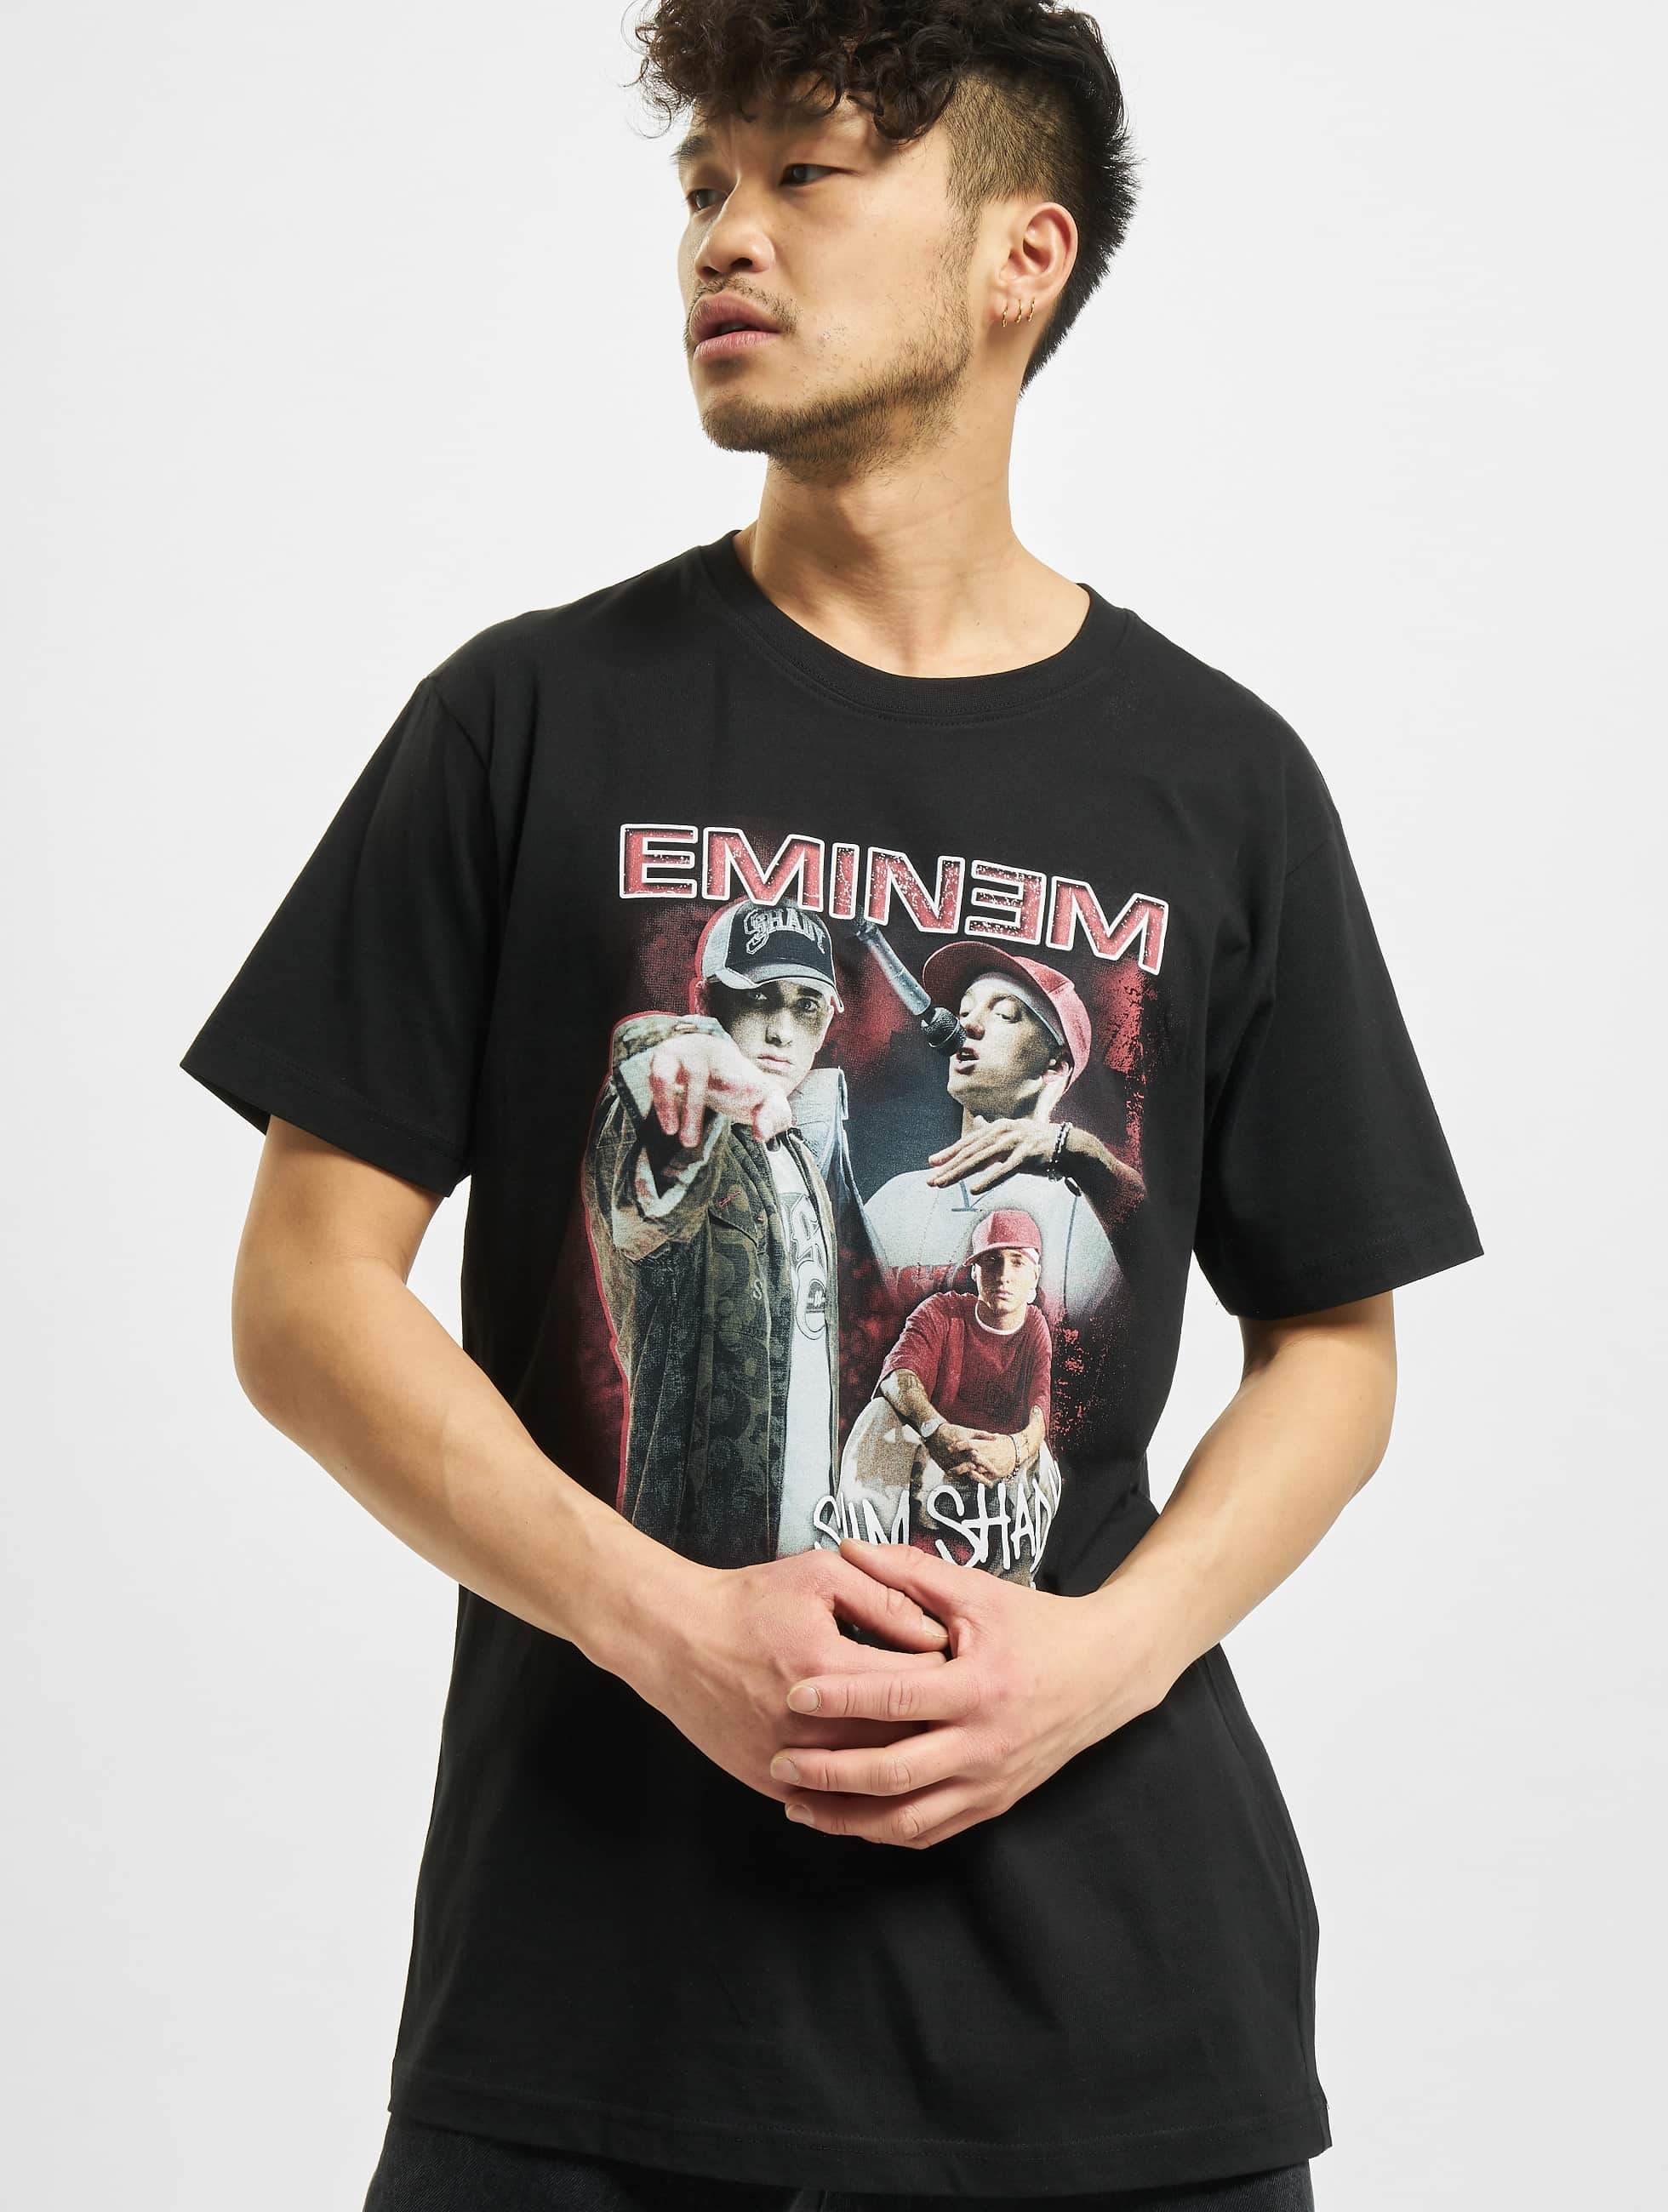 komme ud for Enumerate forfremmelse Mister Tee Overwear / T-Shirt Eminem Slim Shady in black 398169